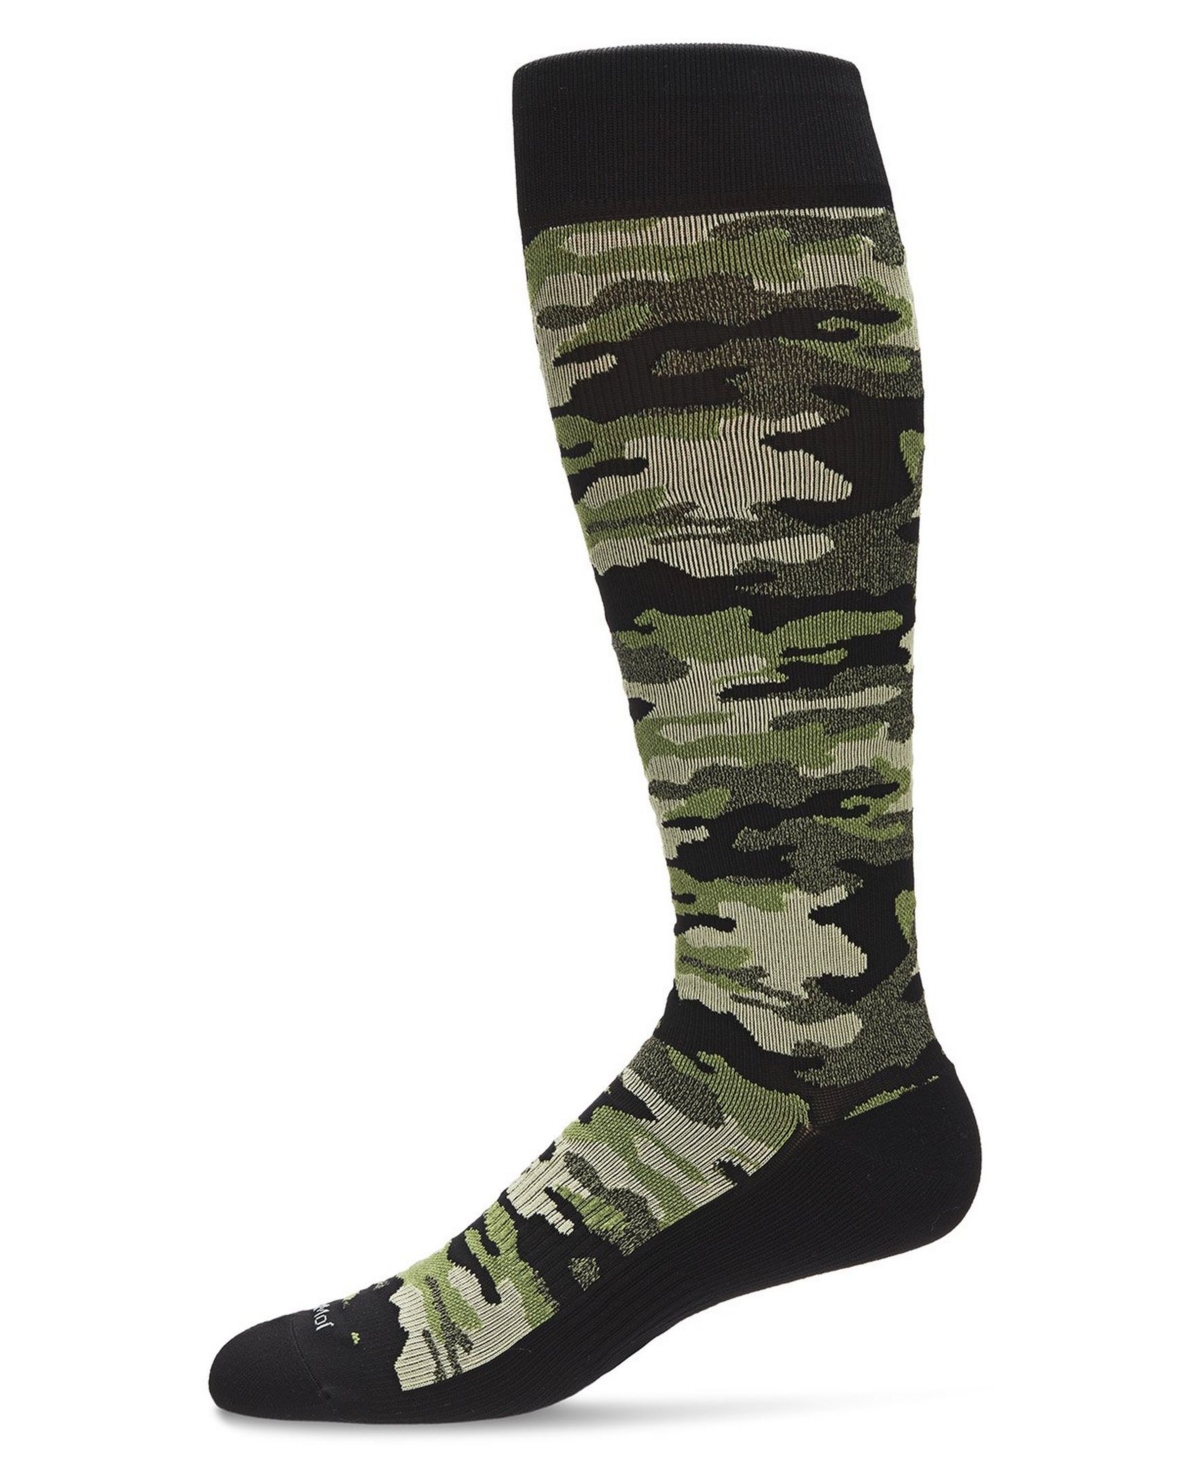 Men's Camo Nylon Compression Socks - Navy